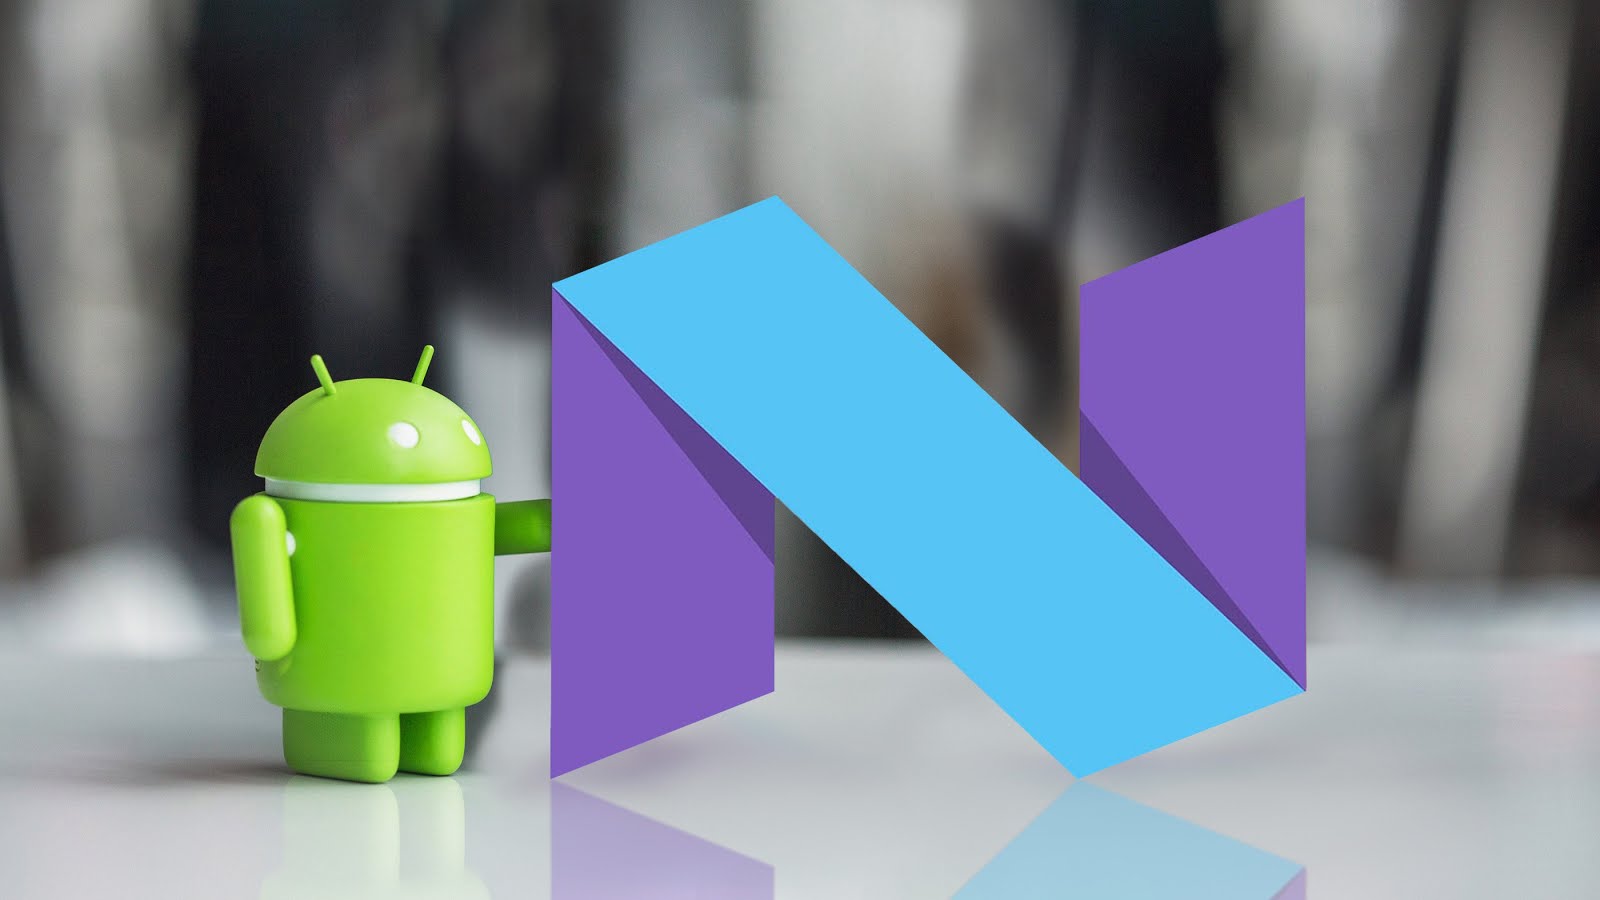 wizprof | Android 7.0 Nougat | มาตามคาด Google ปล่อย Android 7.0 Nougat ออกมาอย่างเป็นทางการแล้ว